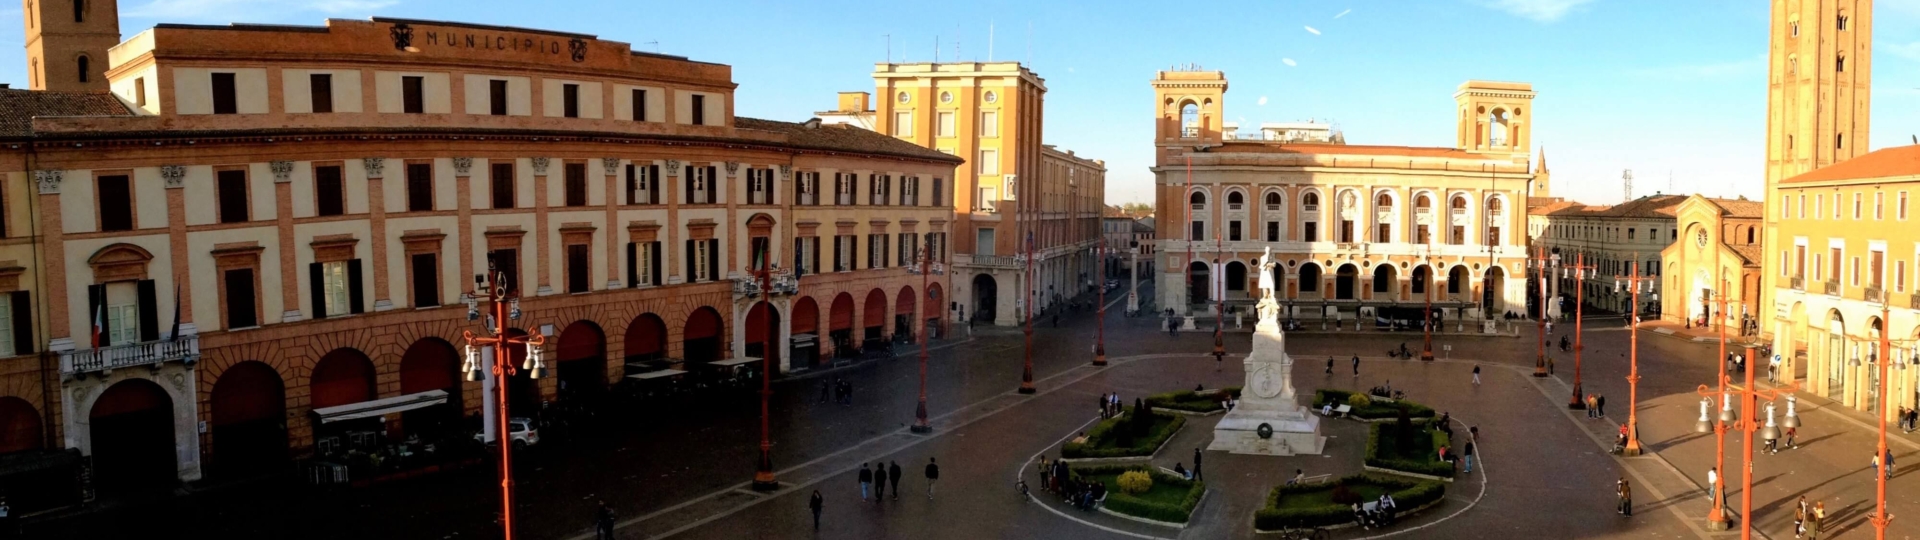 1. Forlì veduta dall’alto di piazza Aurelio Saffi